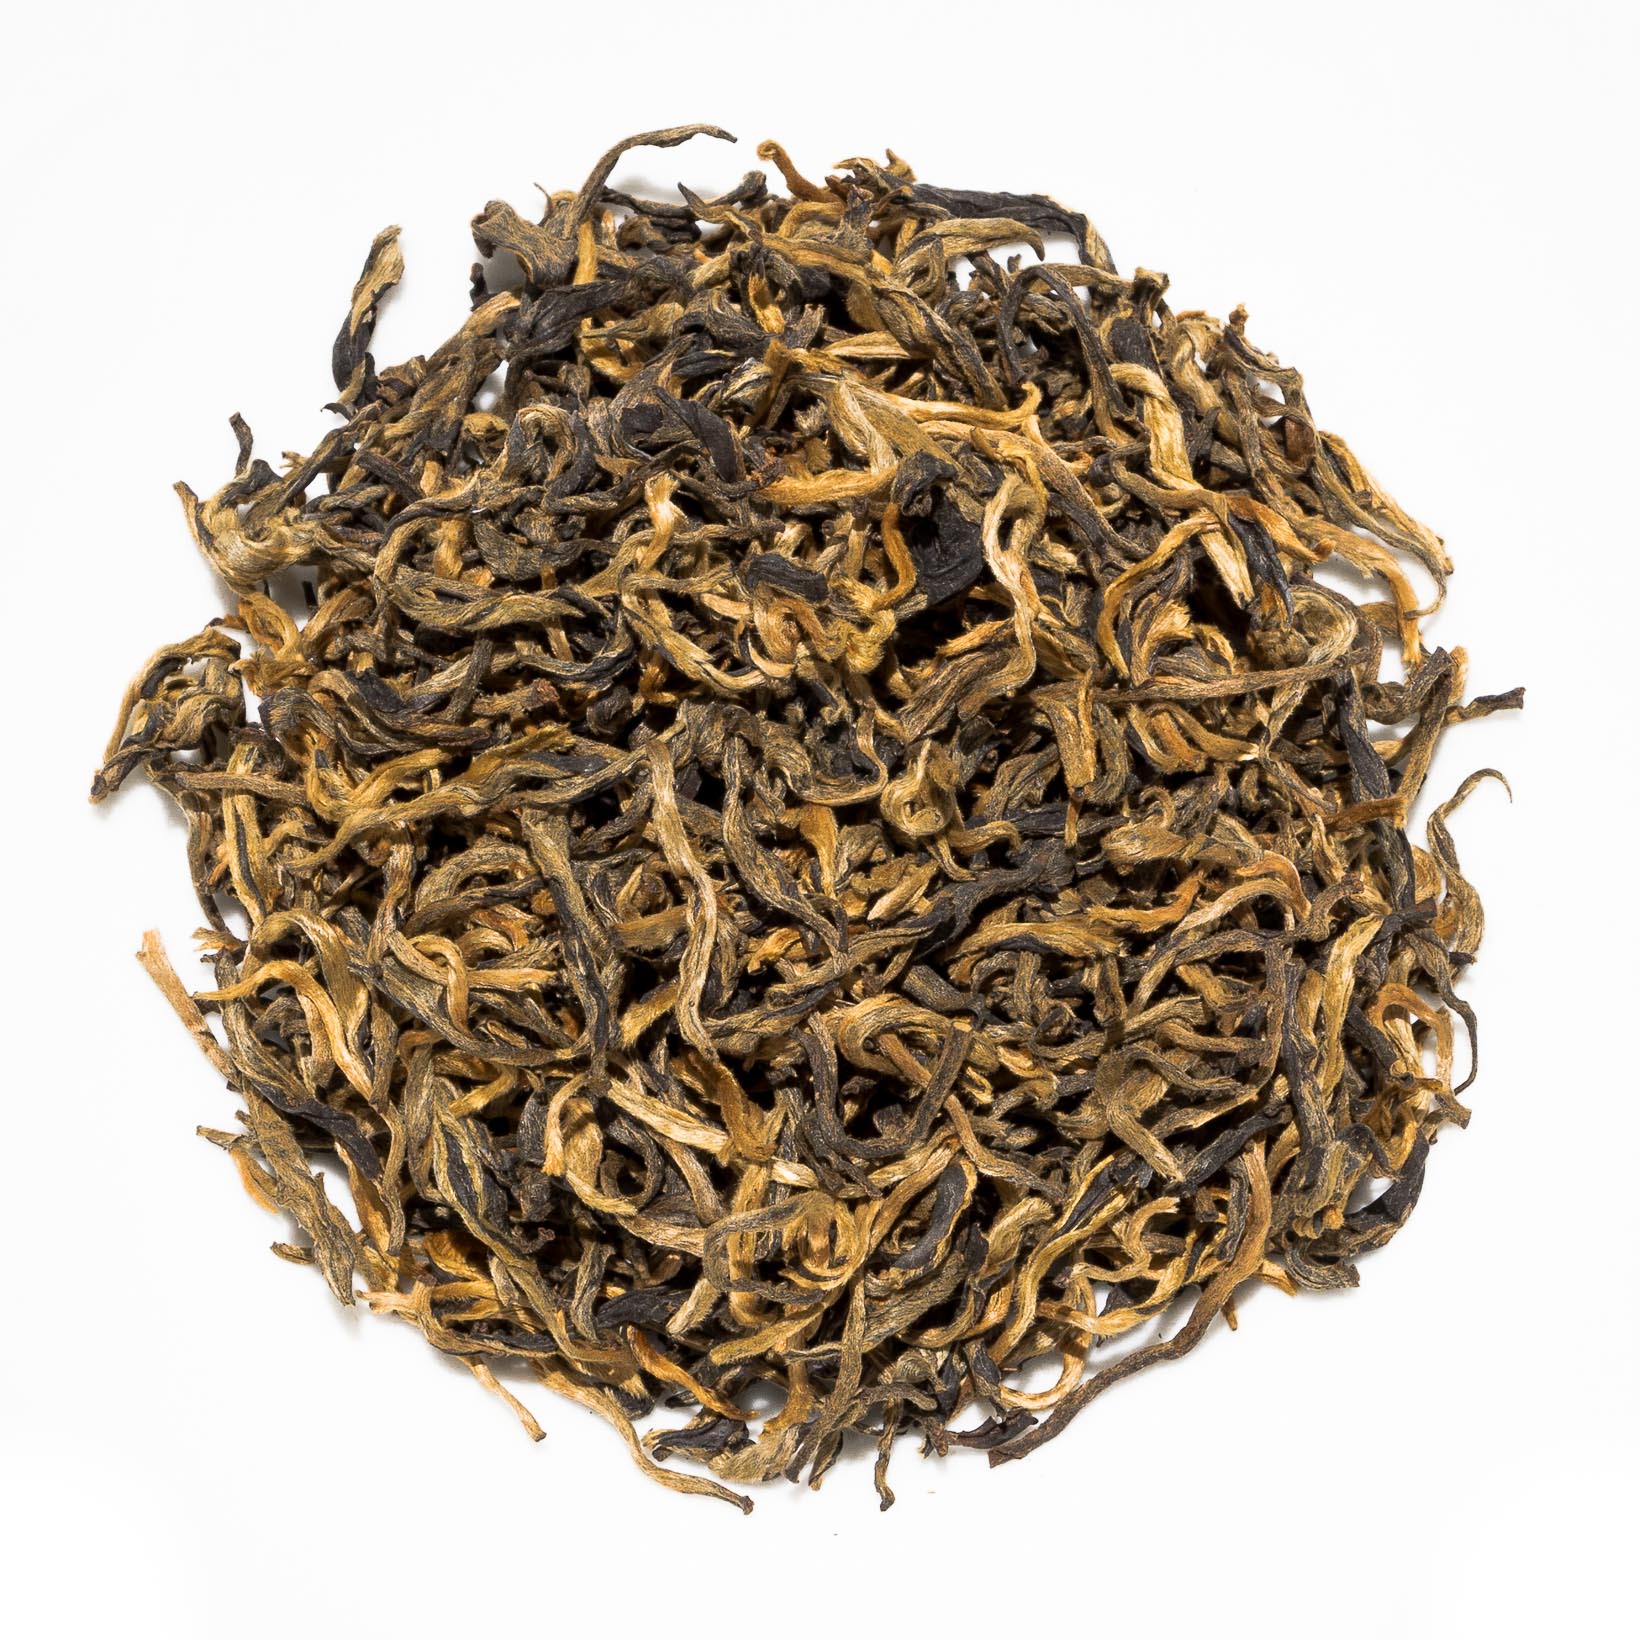 Yun Nan Dianhong Dian Hong 100g Golden Monkey Tea China Chinese Loose Leaf Tea Yunnan Black Tea from China